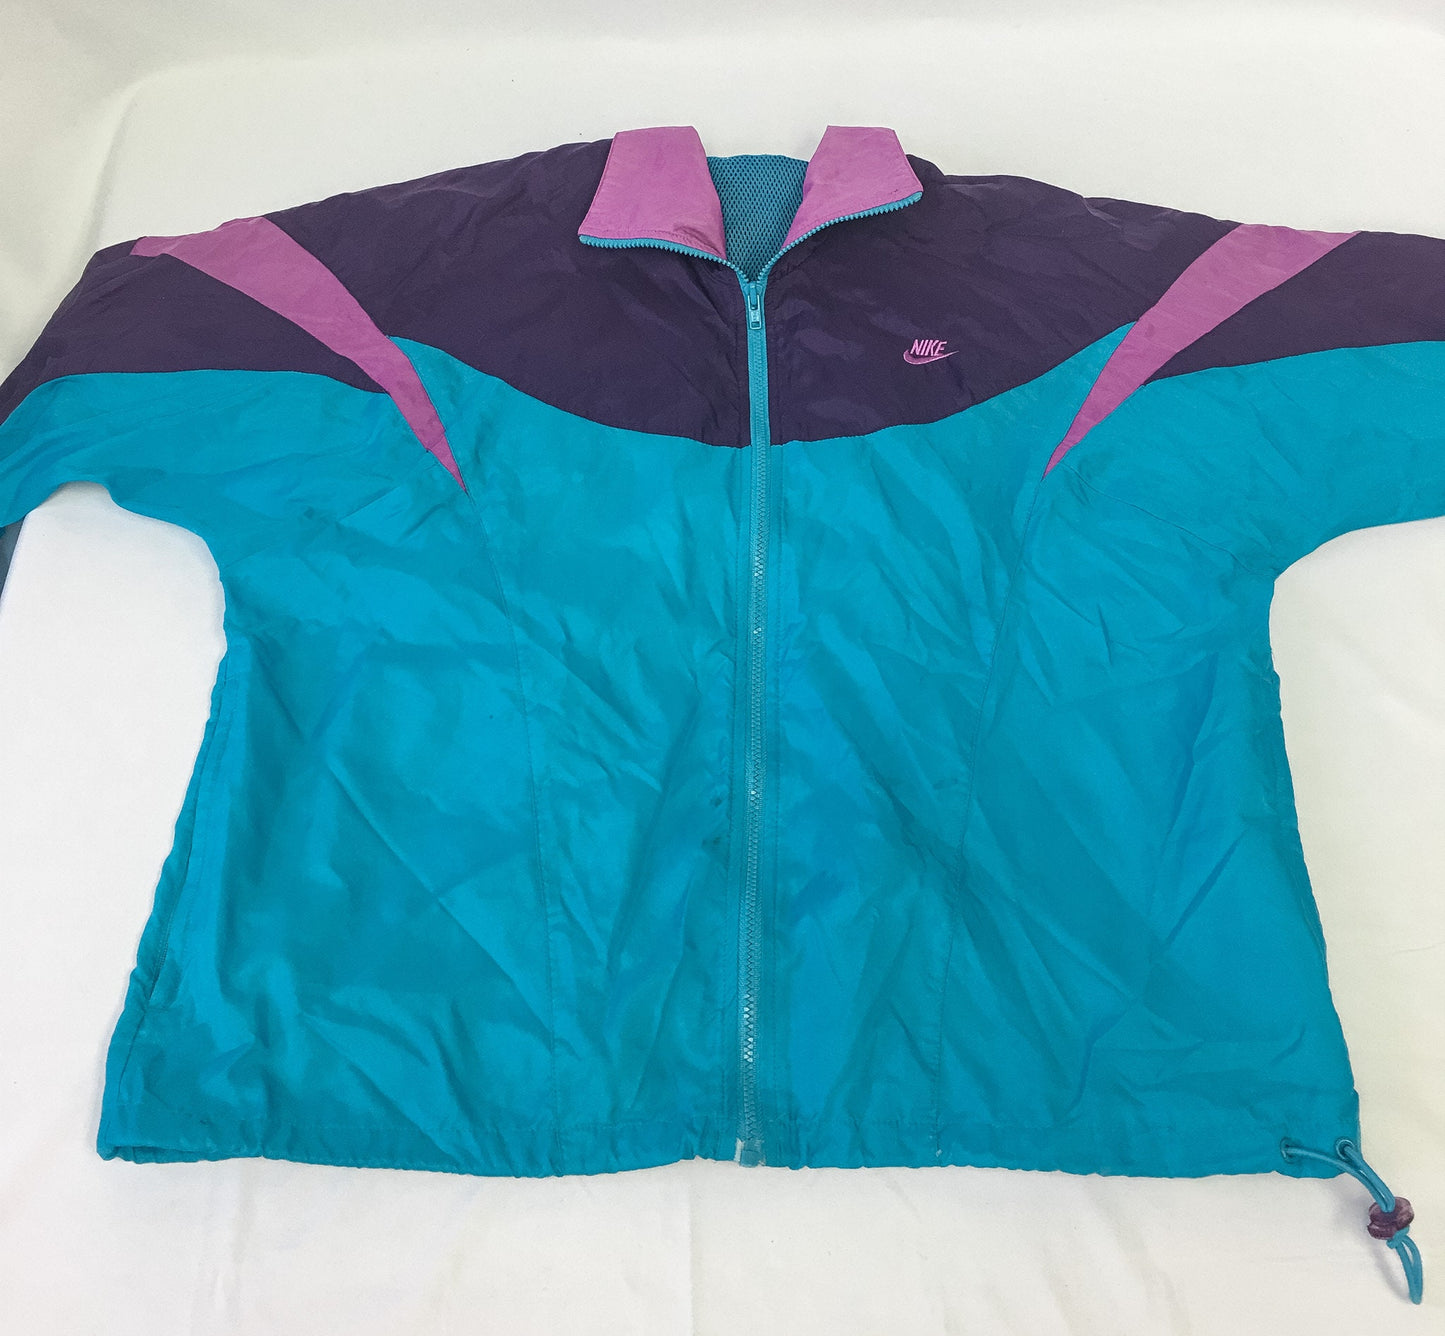 Vintage 90s Nike Teal and Purple Windbreaker Jacket with Detachable Hood, 1990s Nike Jacket